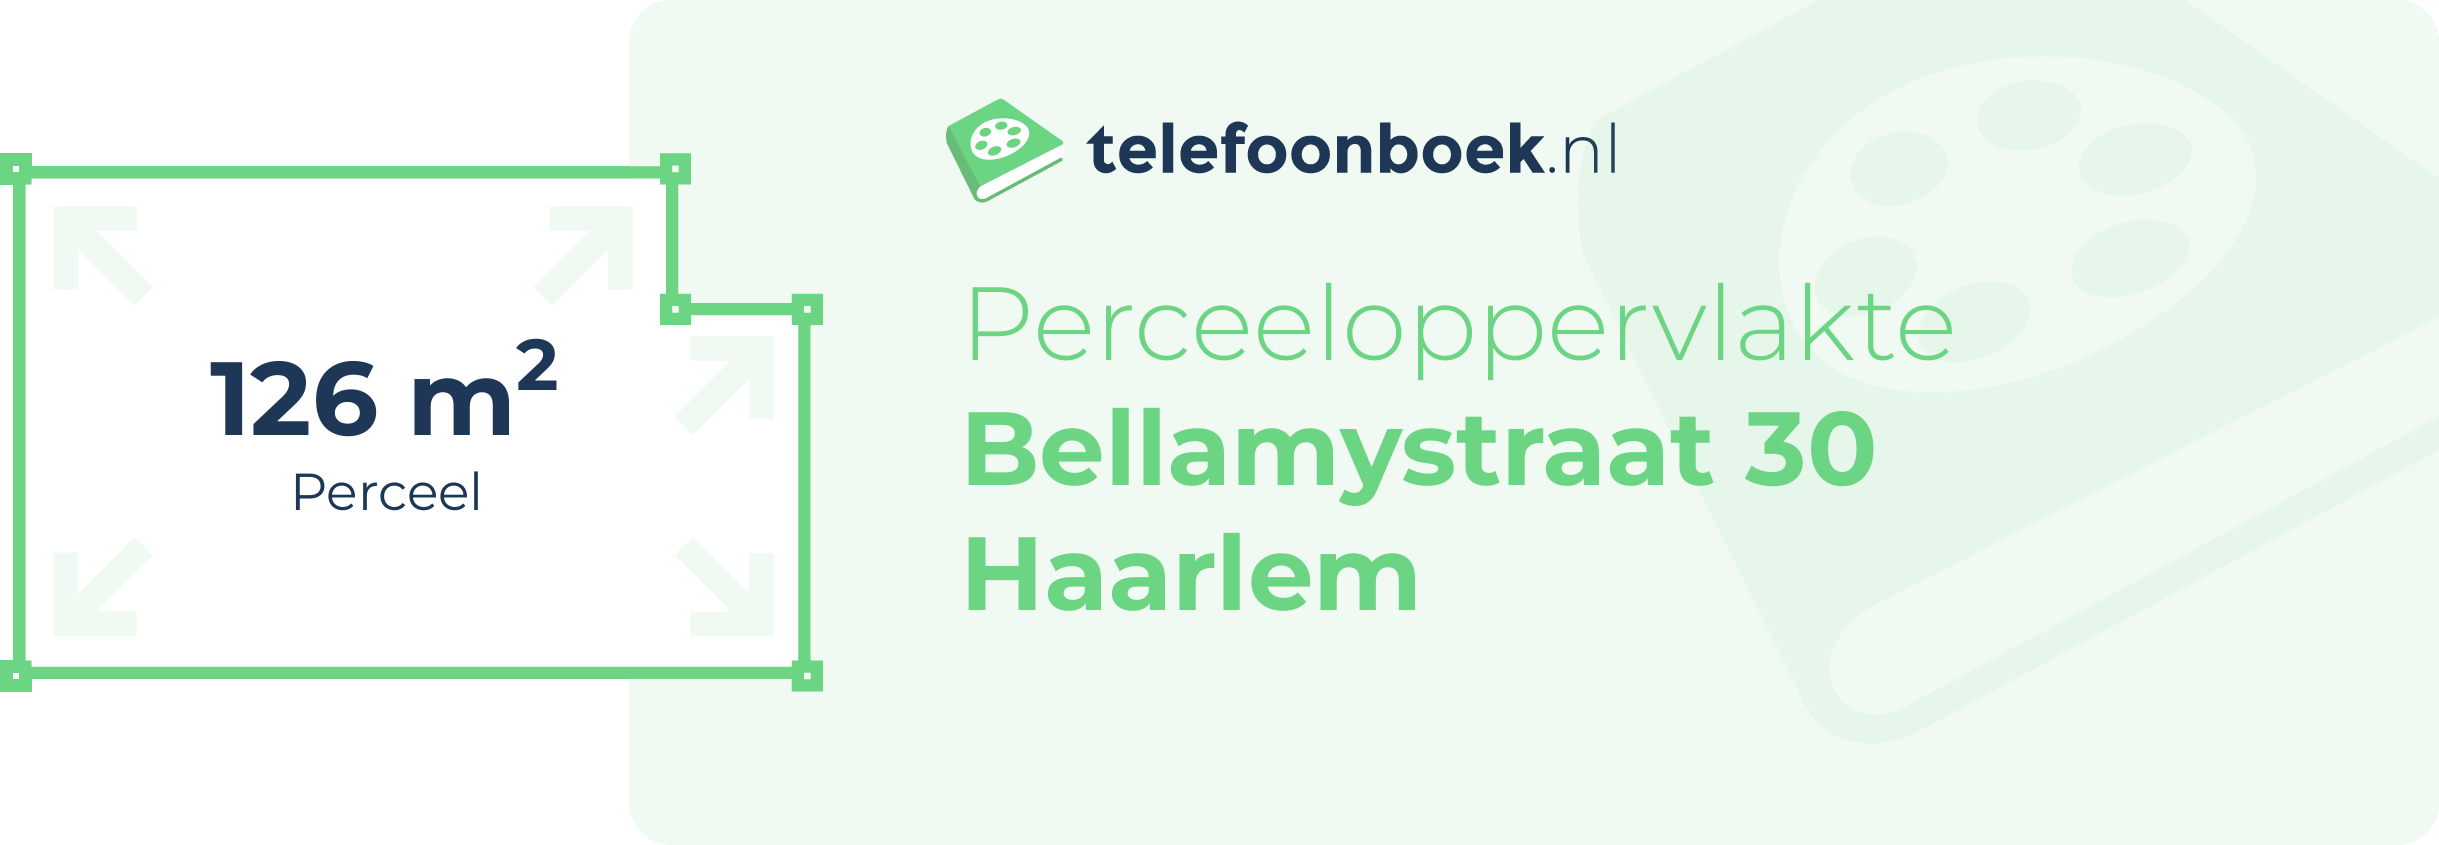 Perceeloppervlakte Bellamystraat 30 Haarlem